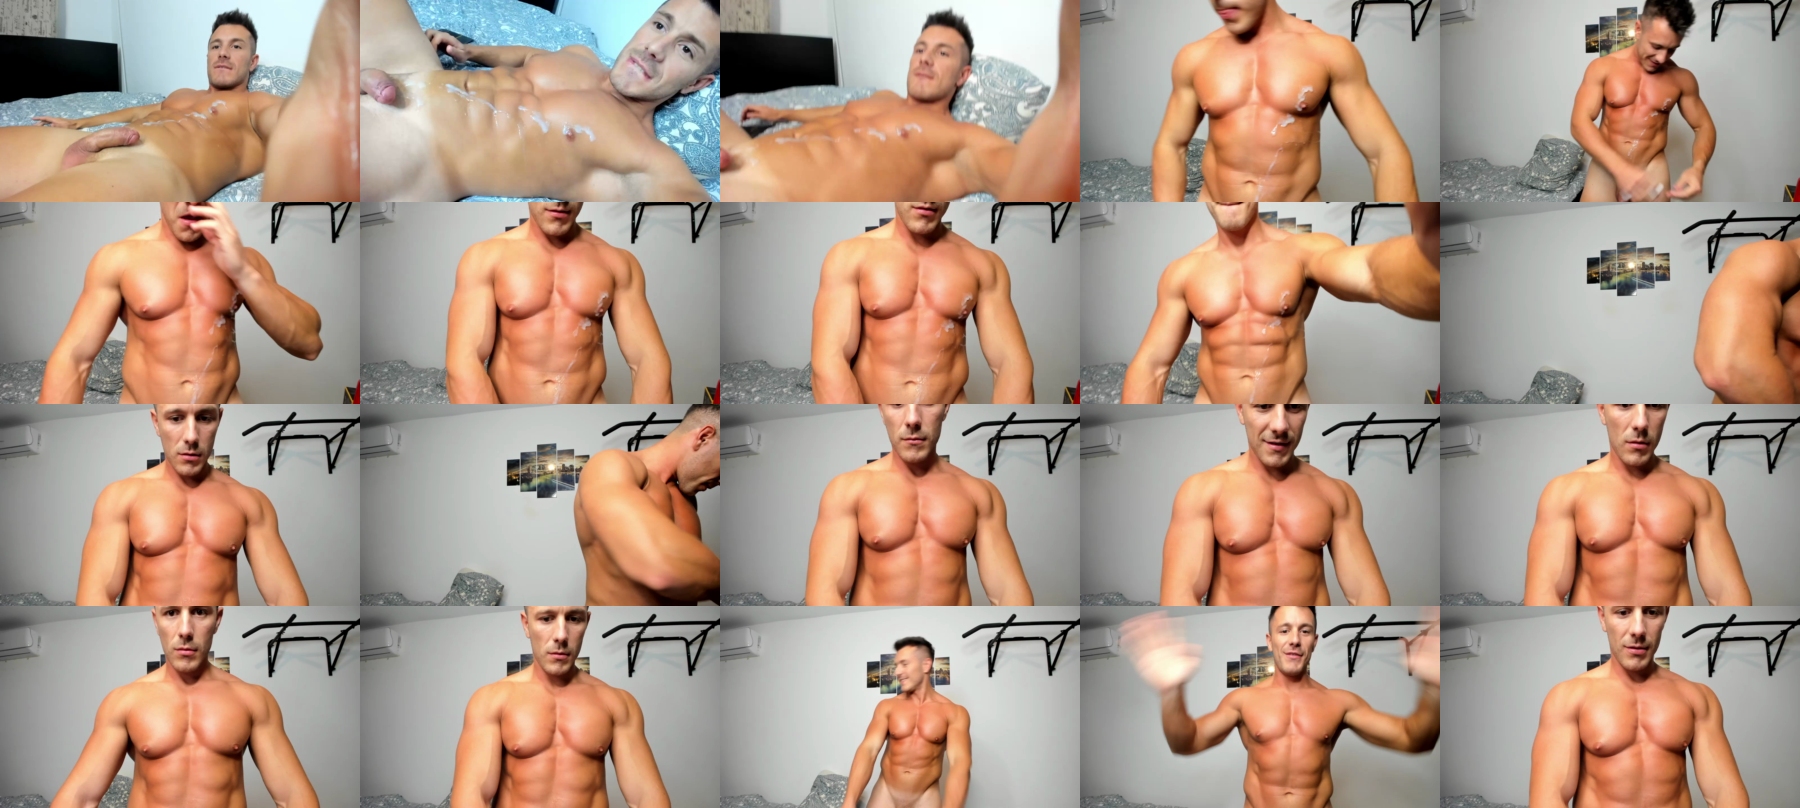 Roberto4ever  04-09-2021 Male Webcam